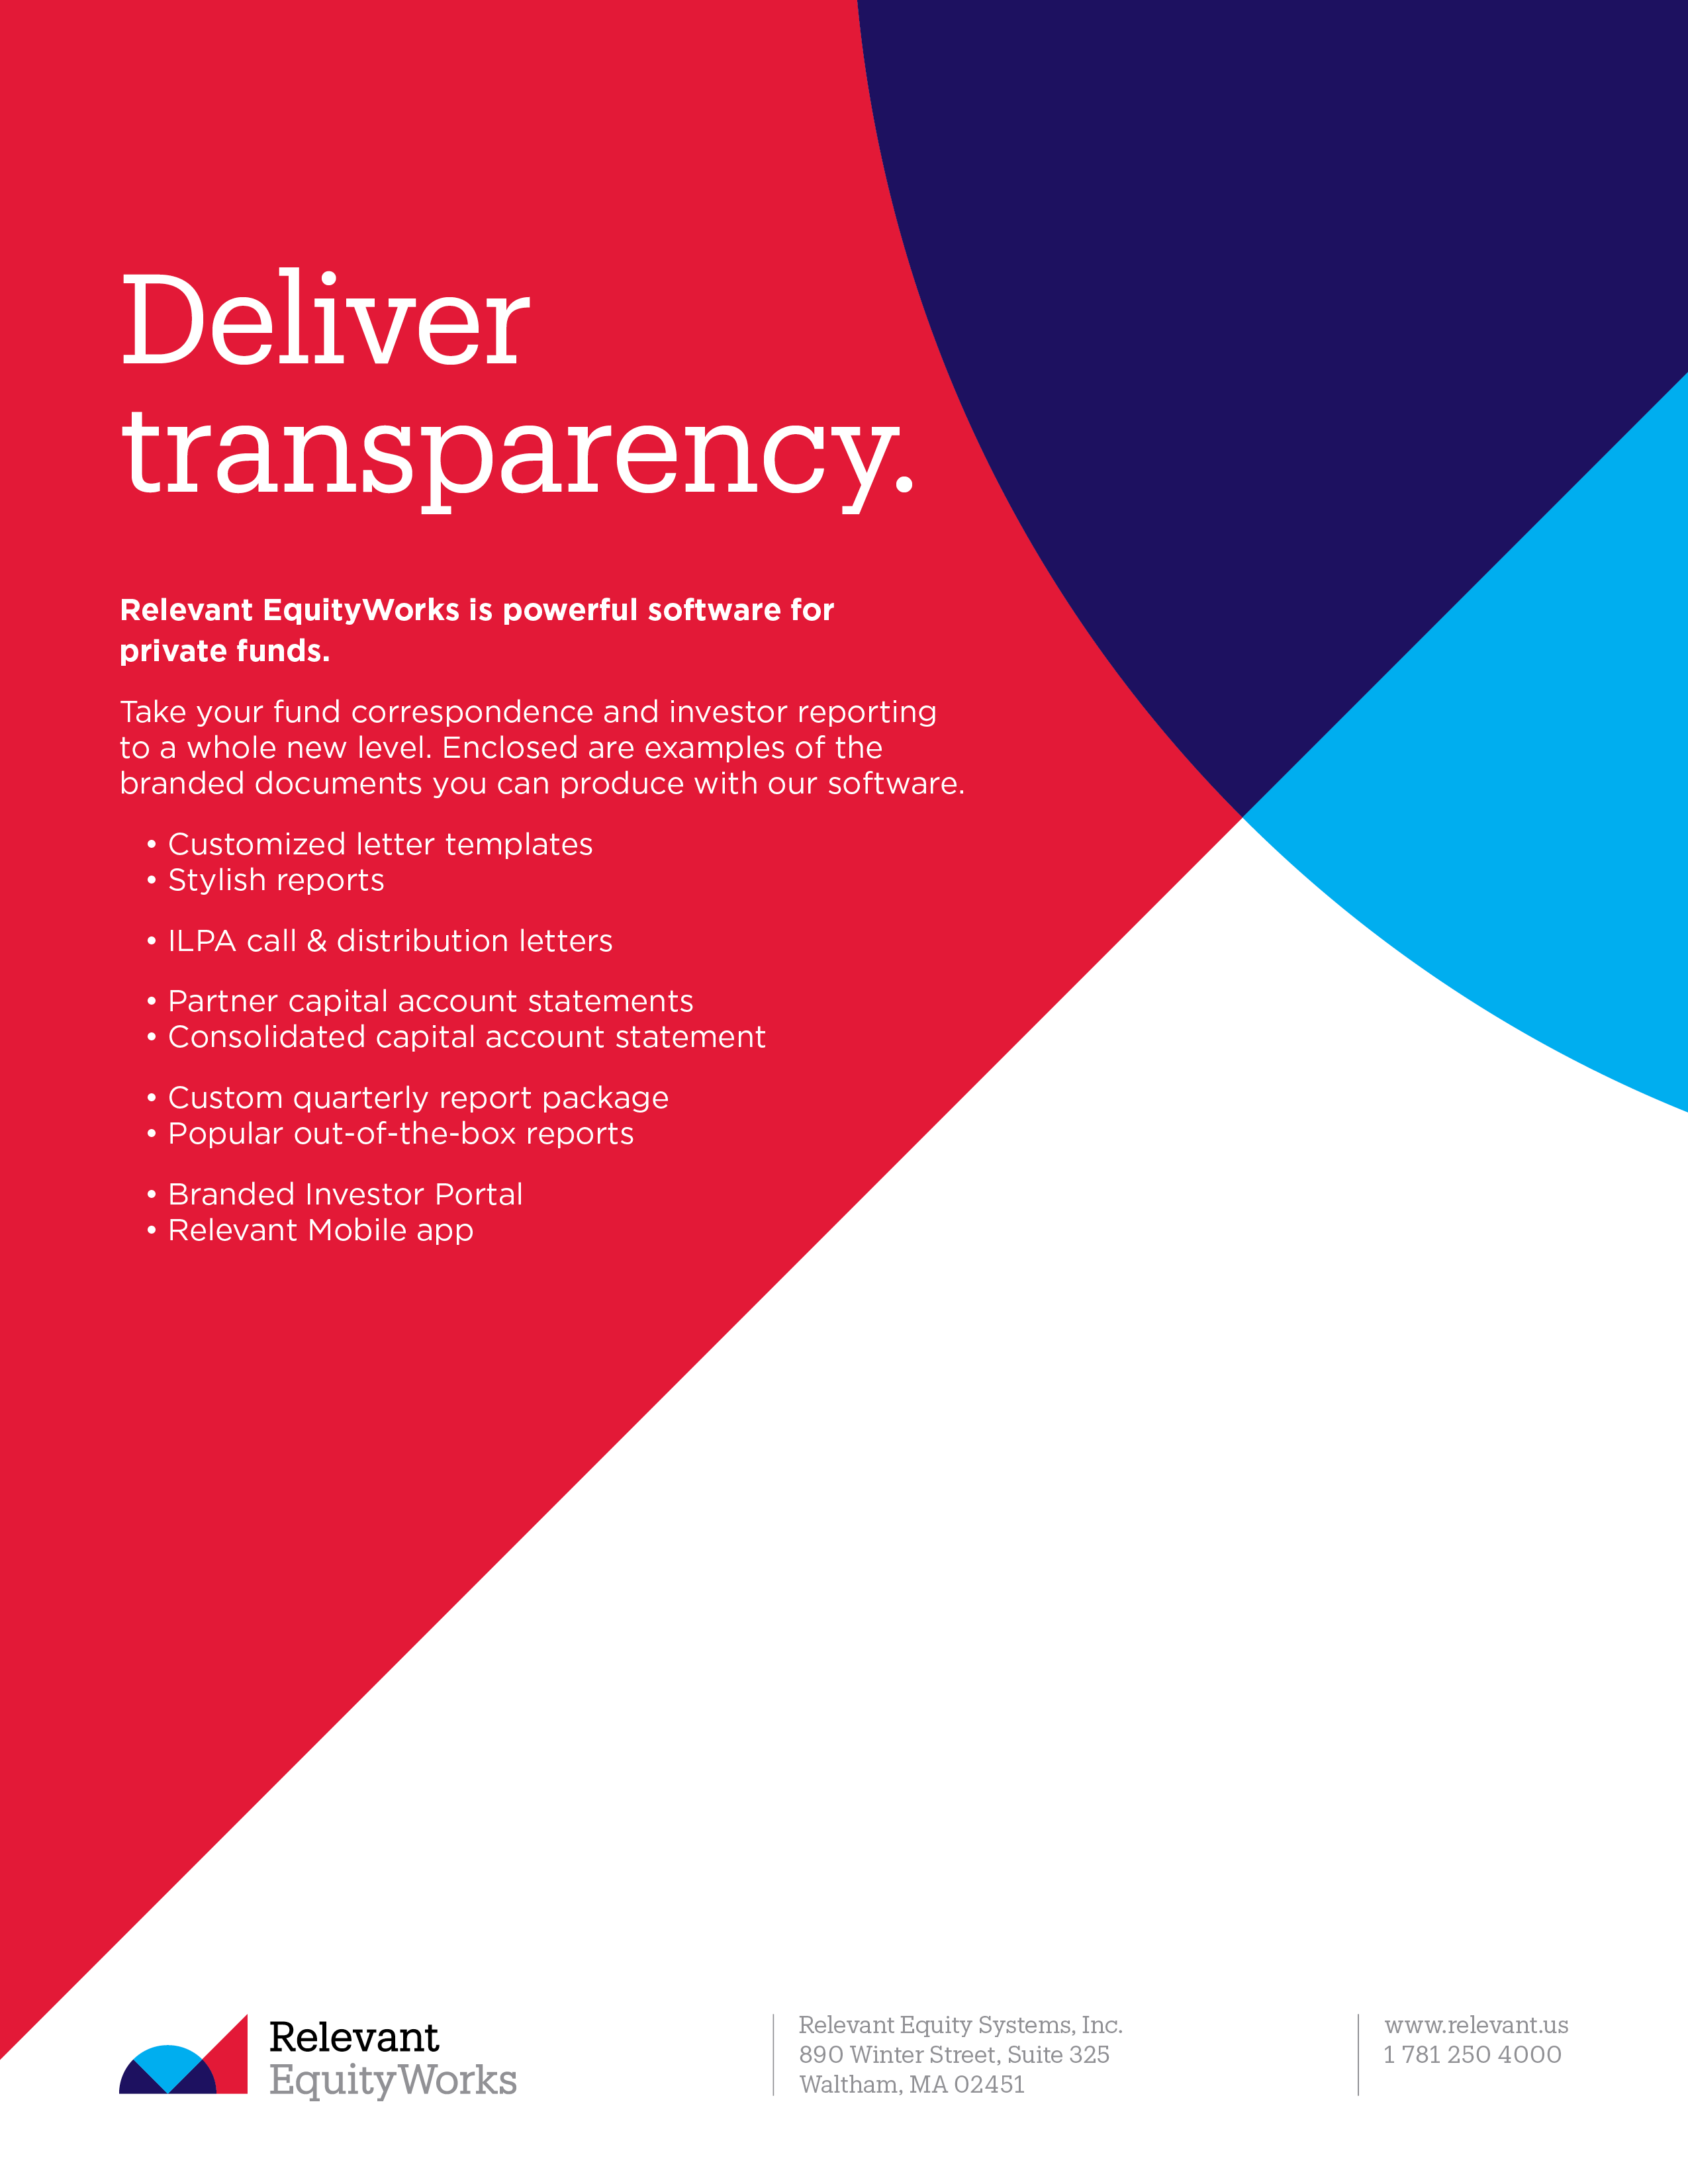 Relevant EquityWorks - Deliver Transparency handout